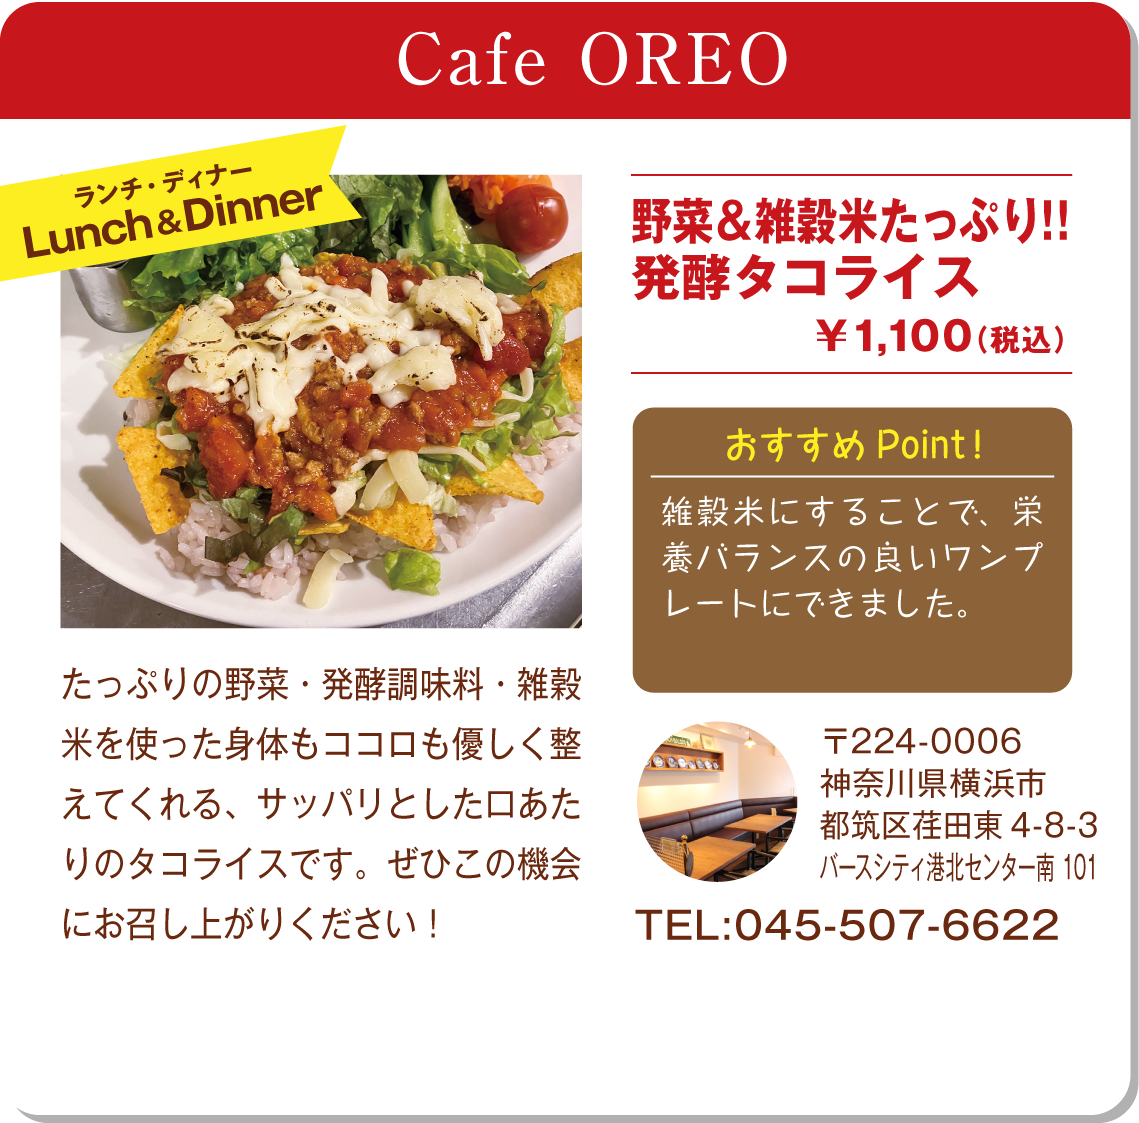 Cafe OREO